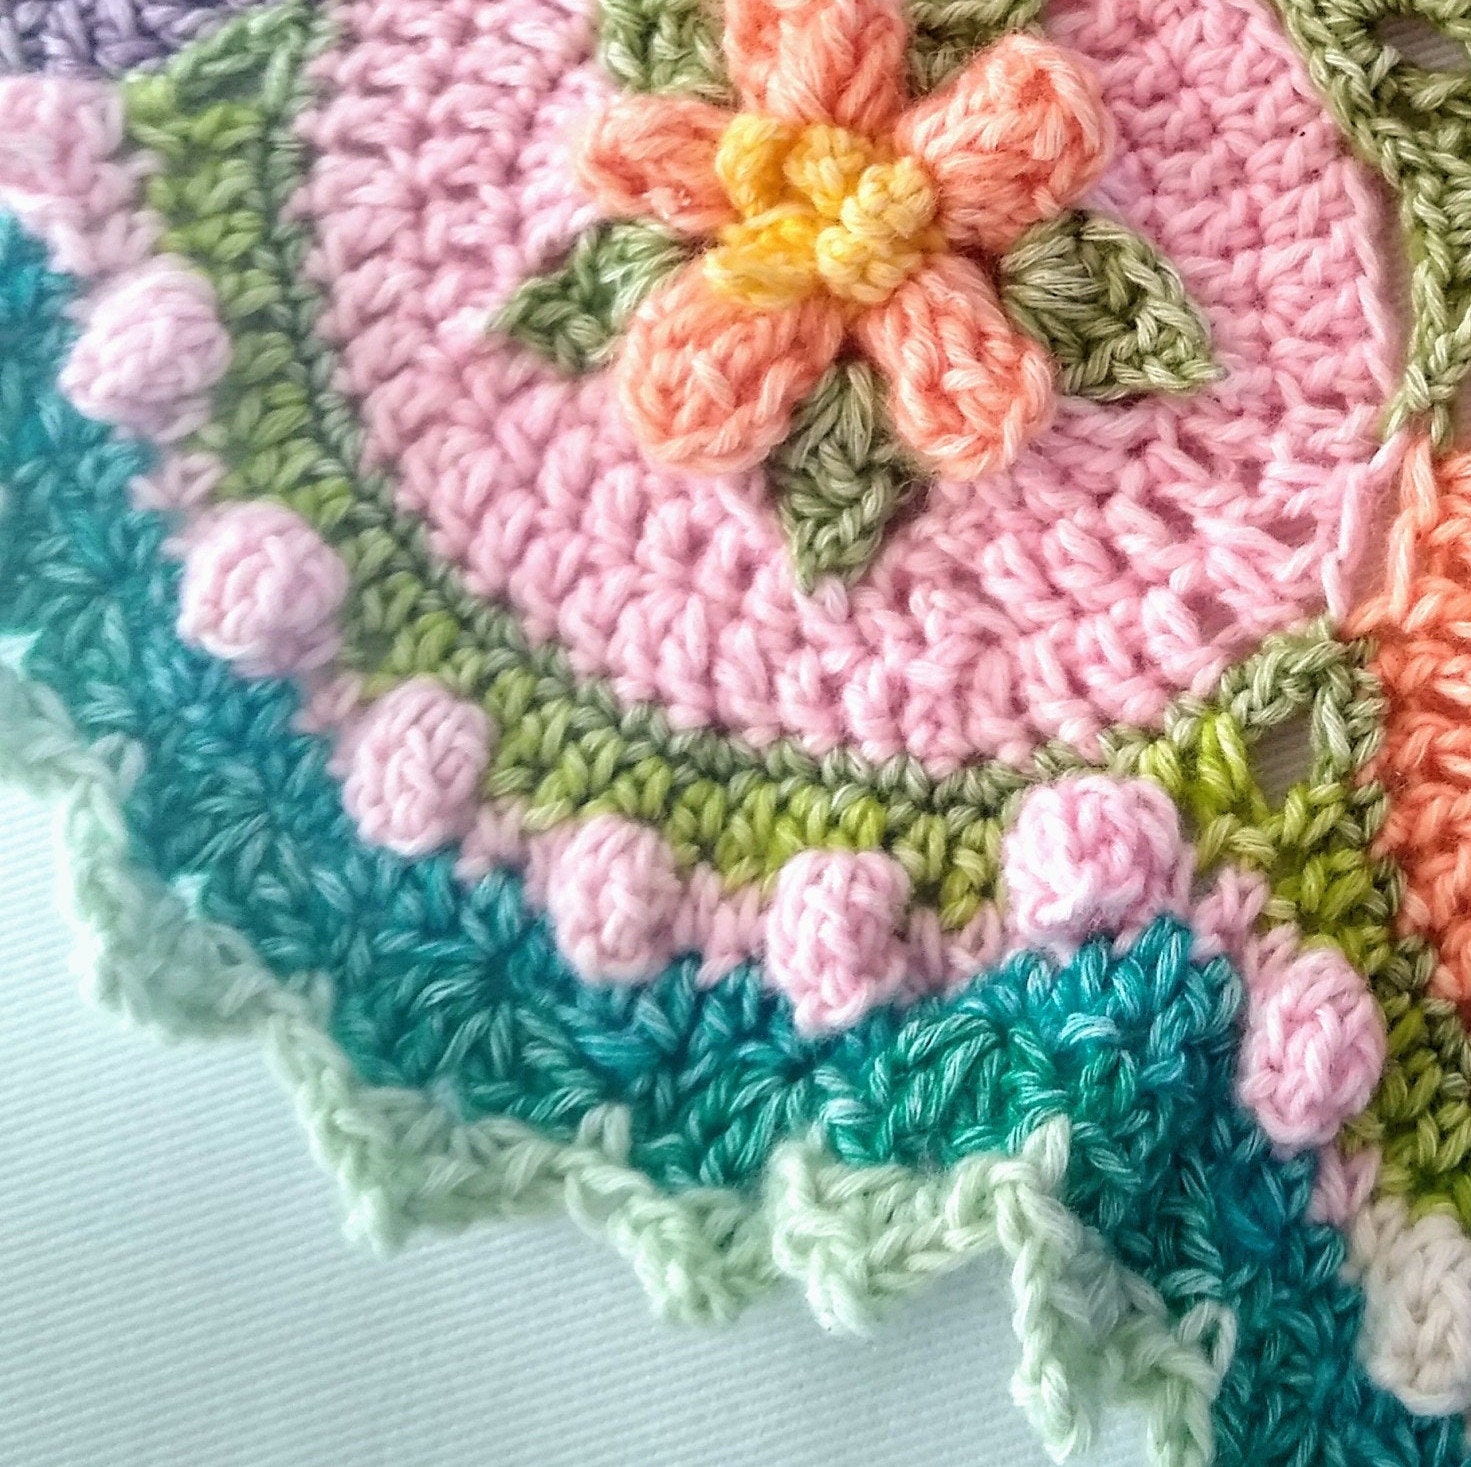 Free Pattern Crochet Apple Dishcloth - mellie blossom